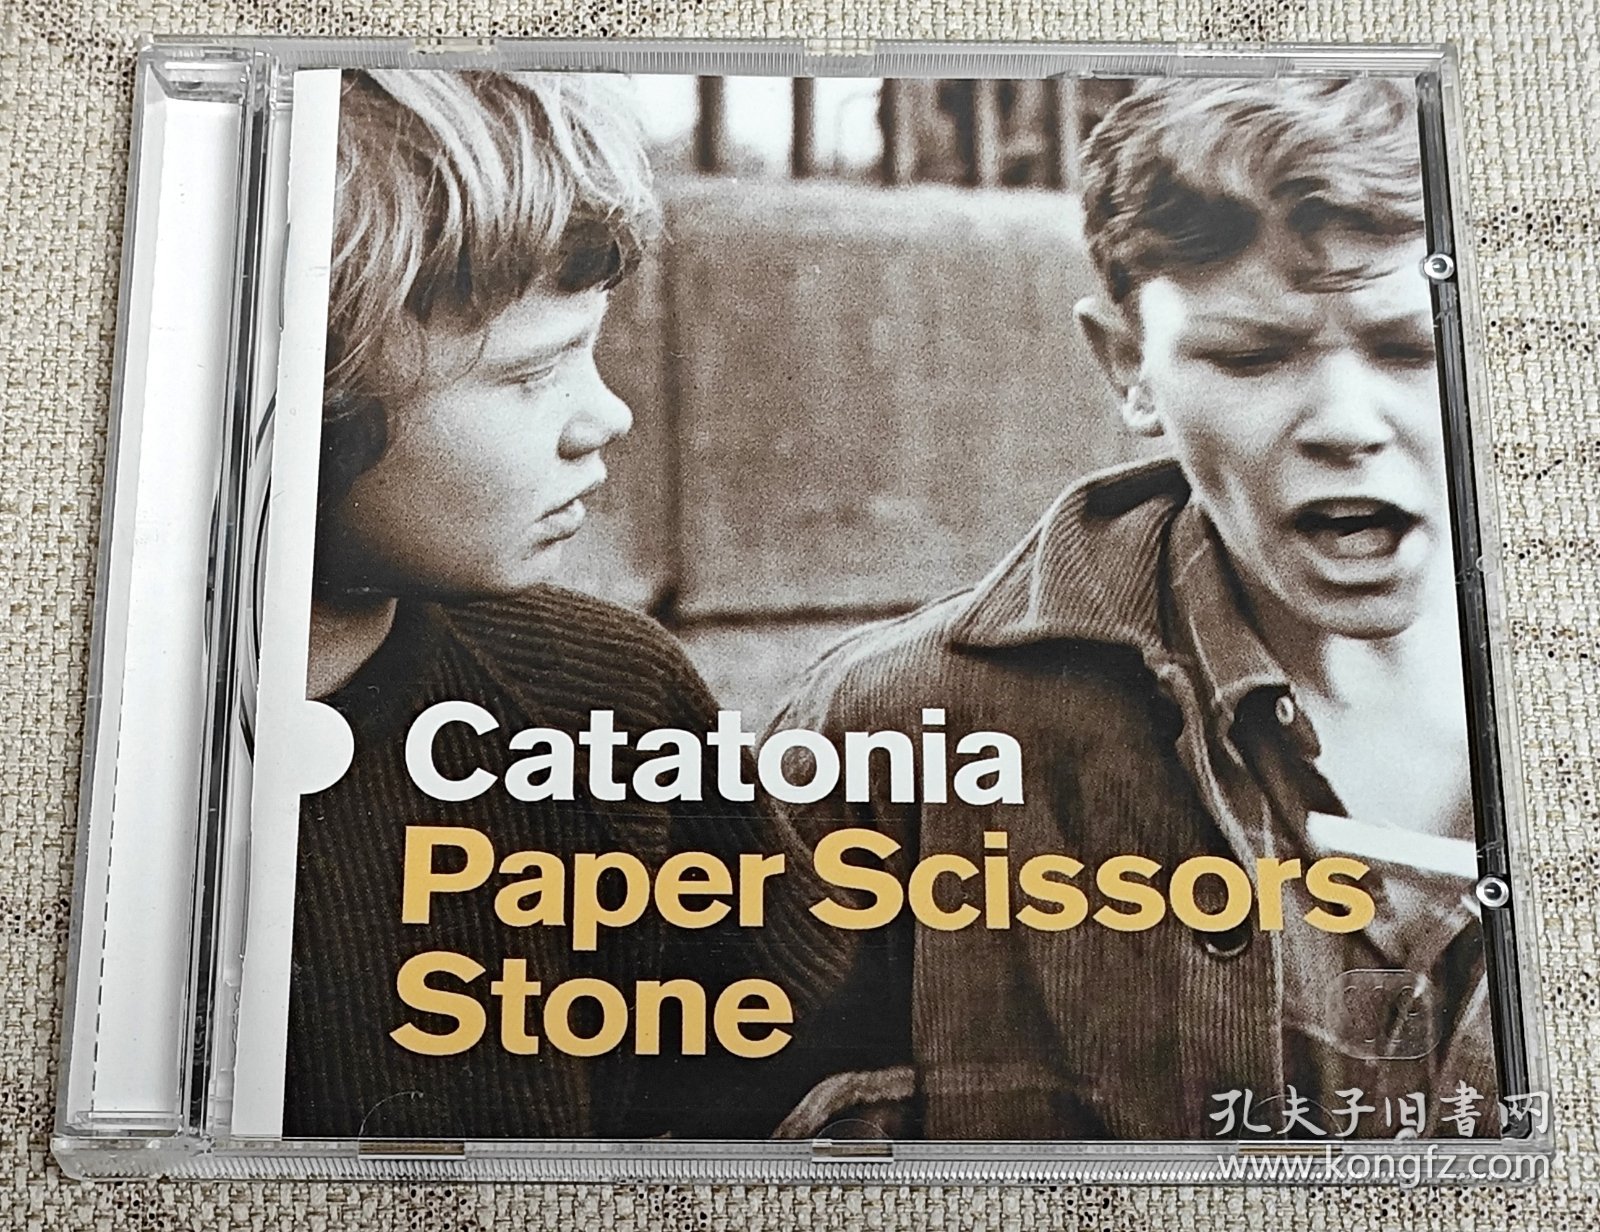 英国乐队Catatonia专辑《Paper Scissors Stone》